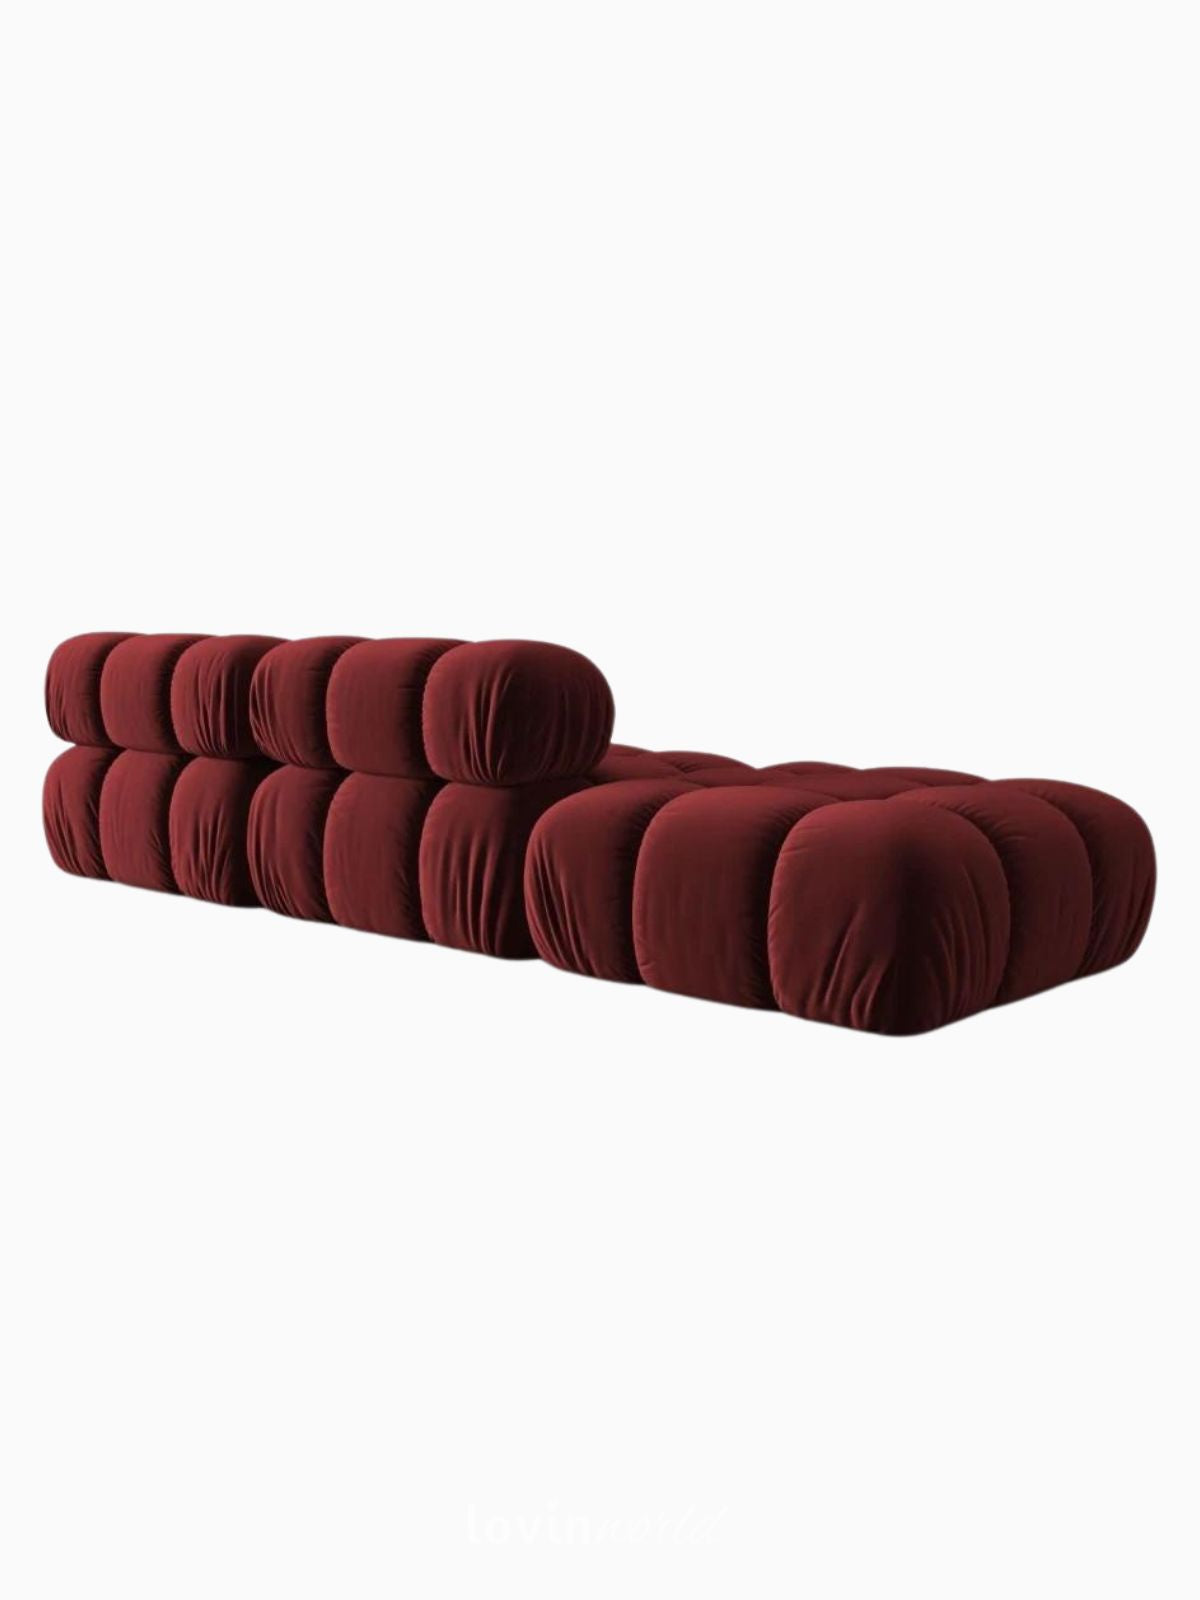 Divano modulare 4 sedute Bellis in velluto, colore rosso-5